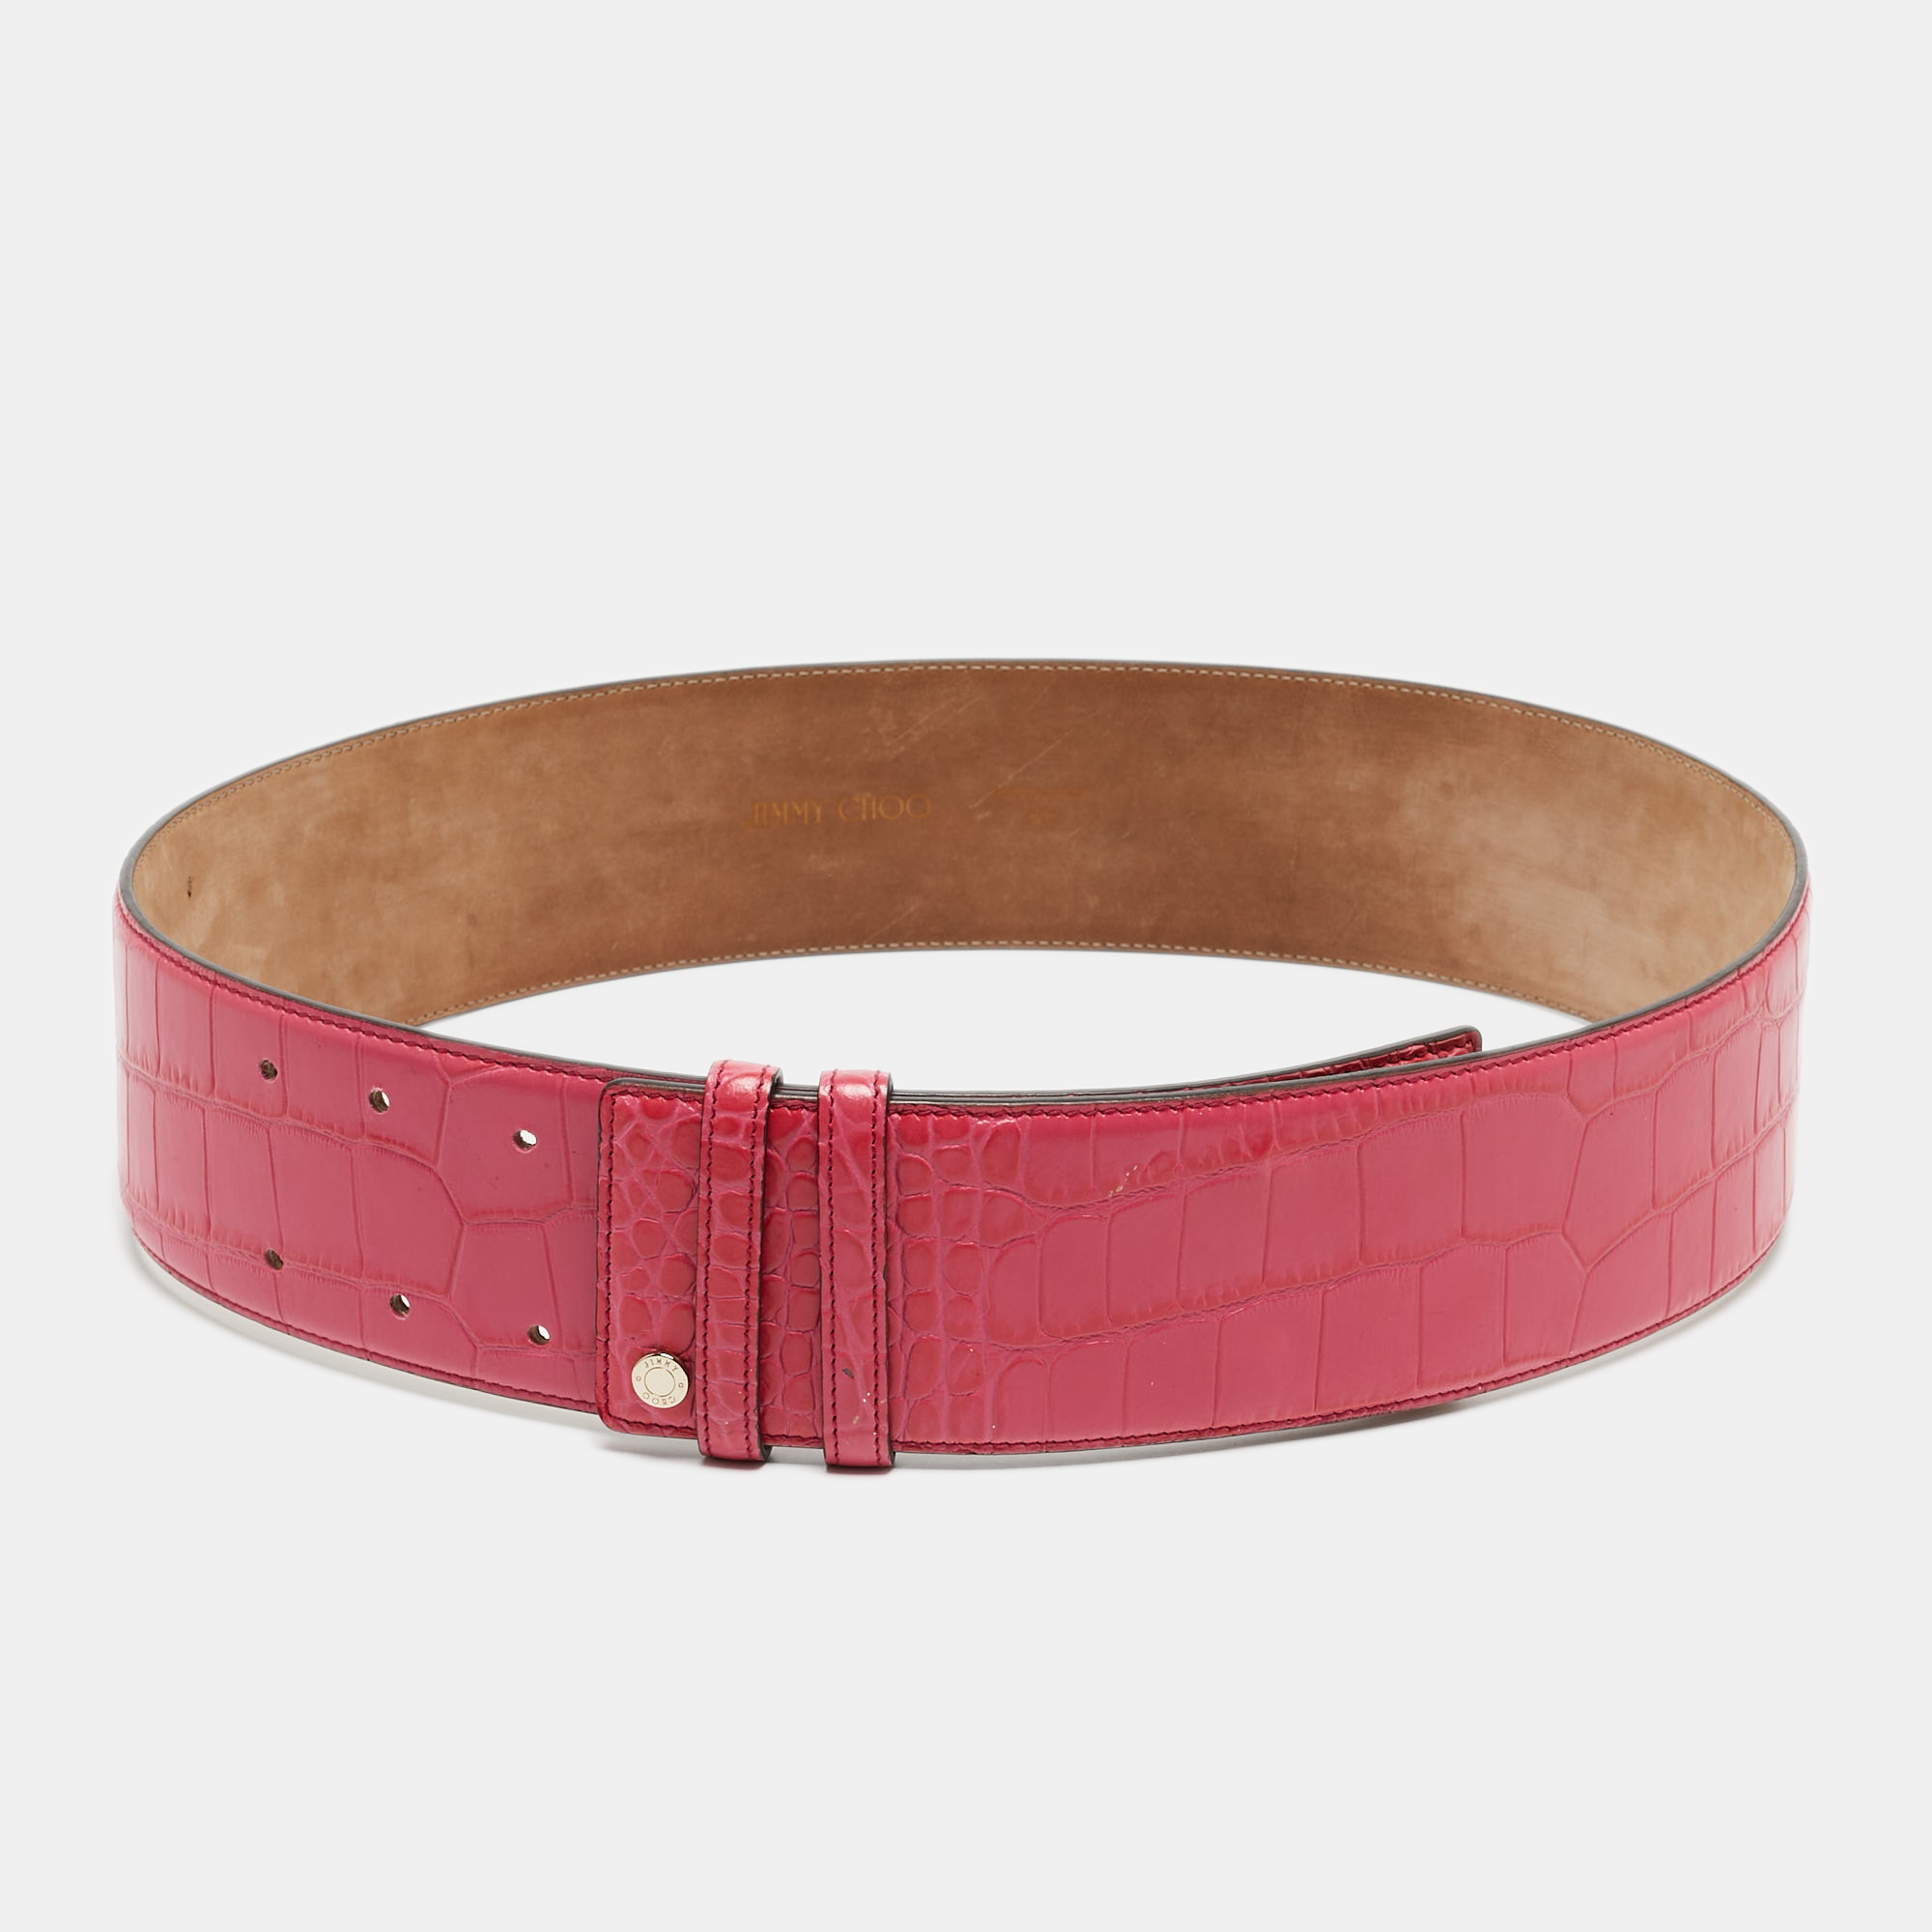 Jimmy Choo Pink Croc Embossed Leather Waist Belt 85 CM